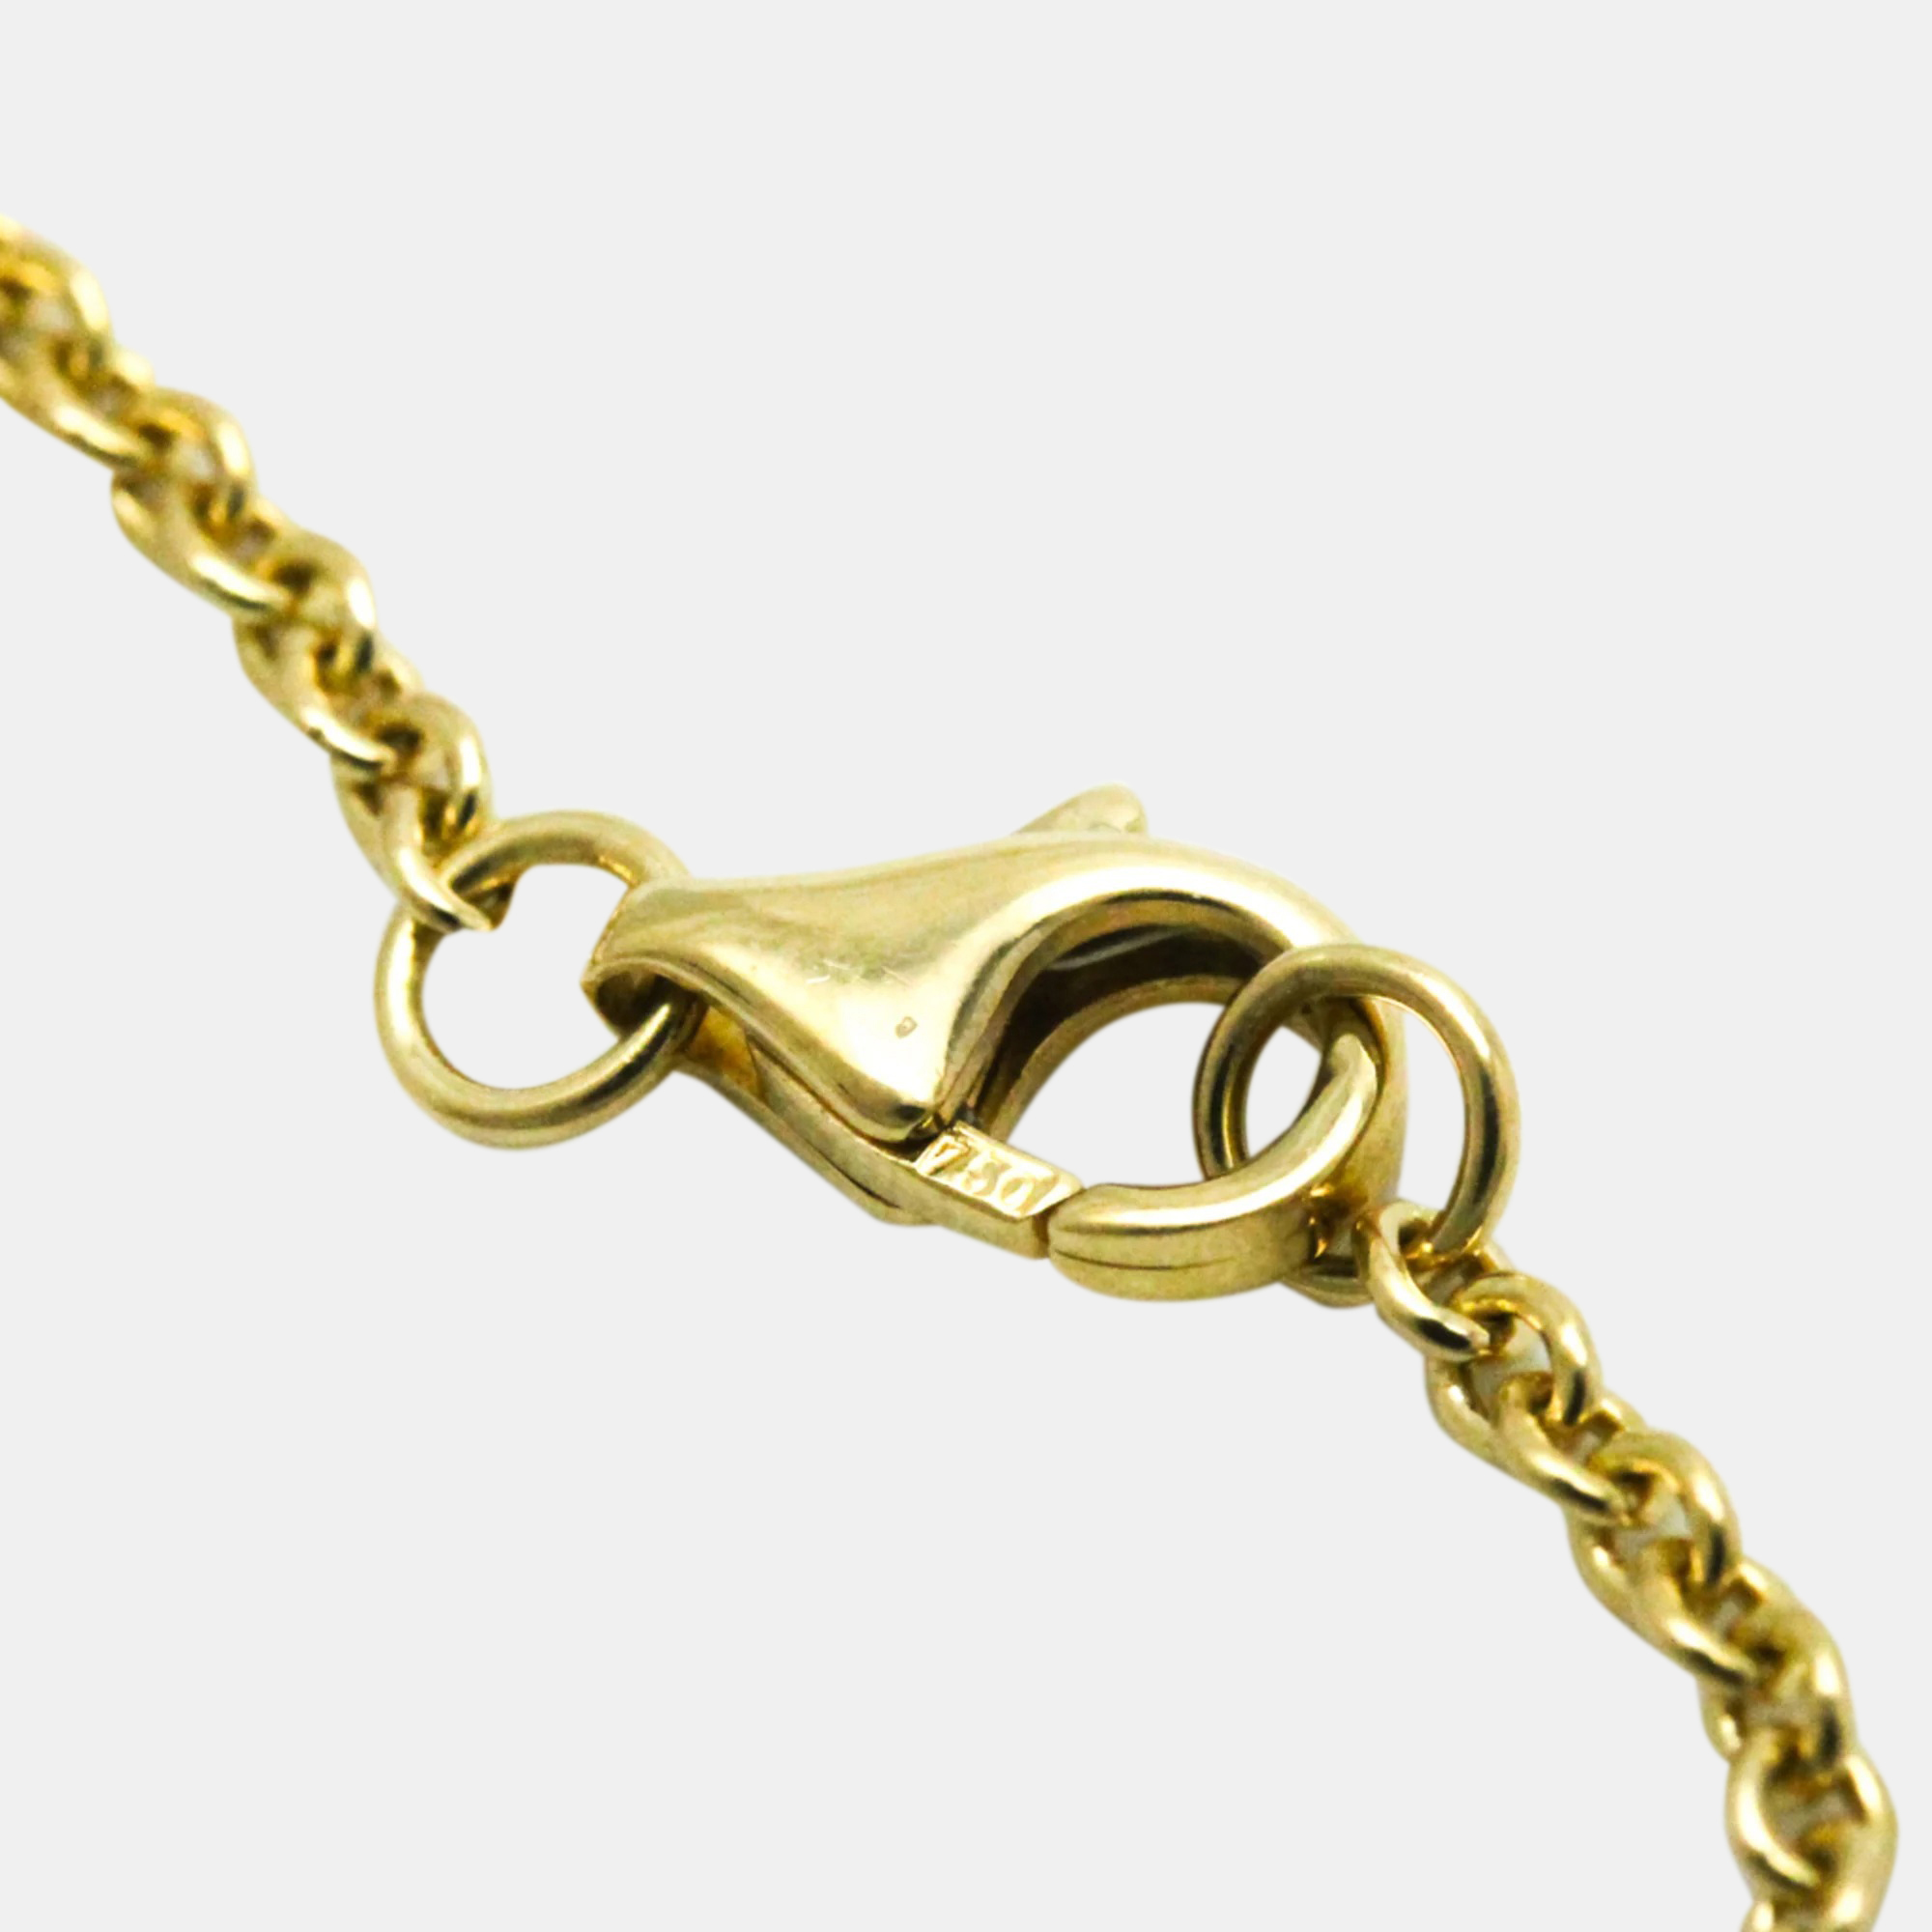 Cartier 18K Yellow Gold Love Chain Bracelet